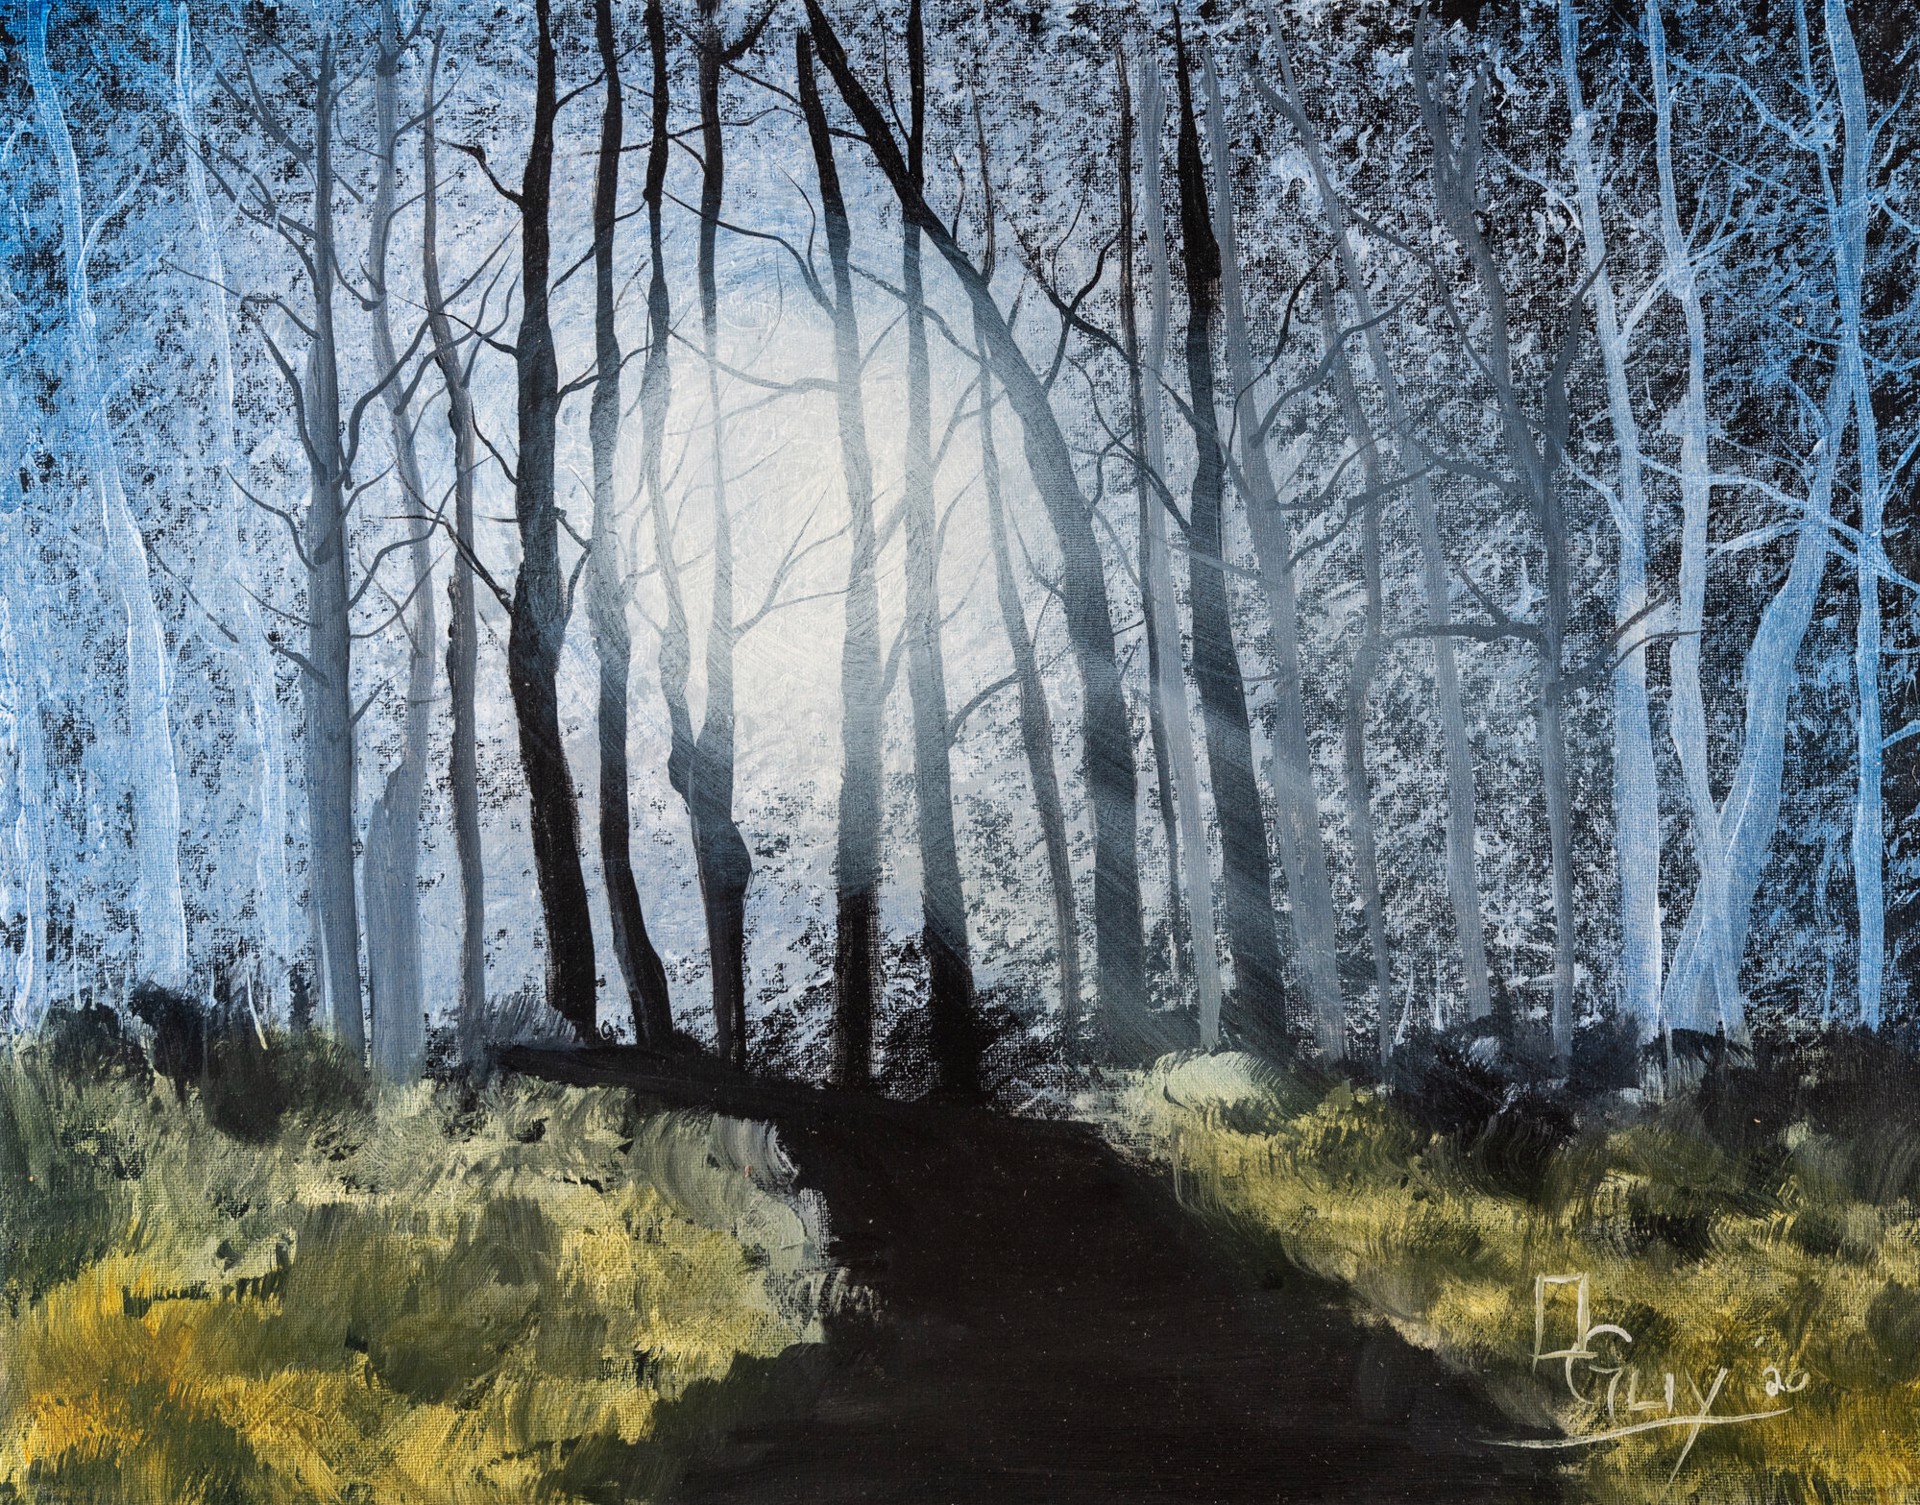 Walk In The woods by Dustin Guy-Harmon